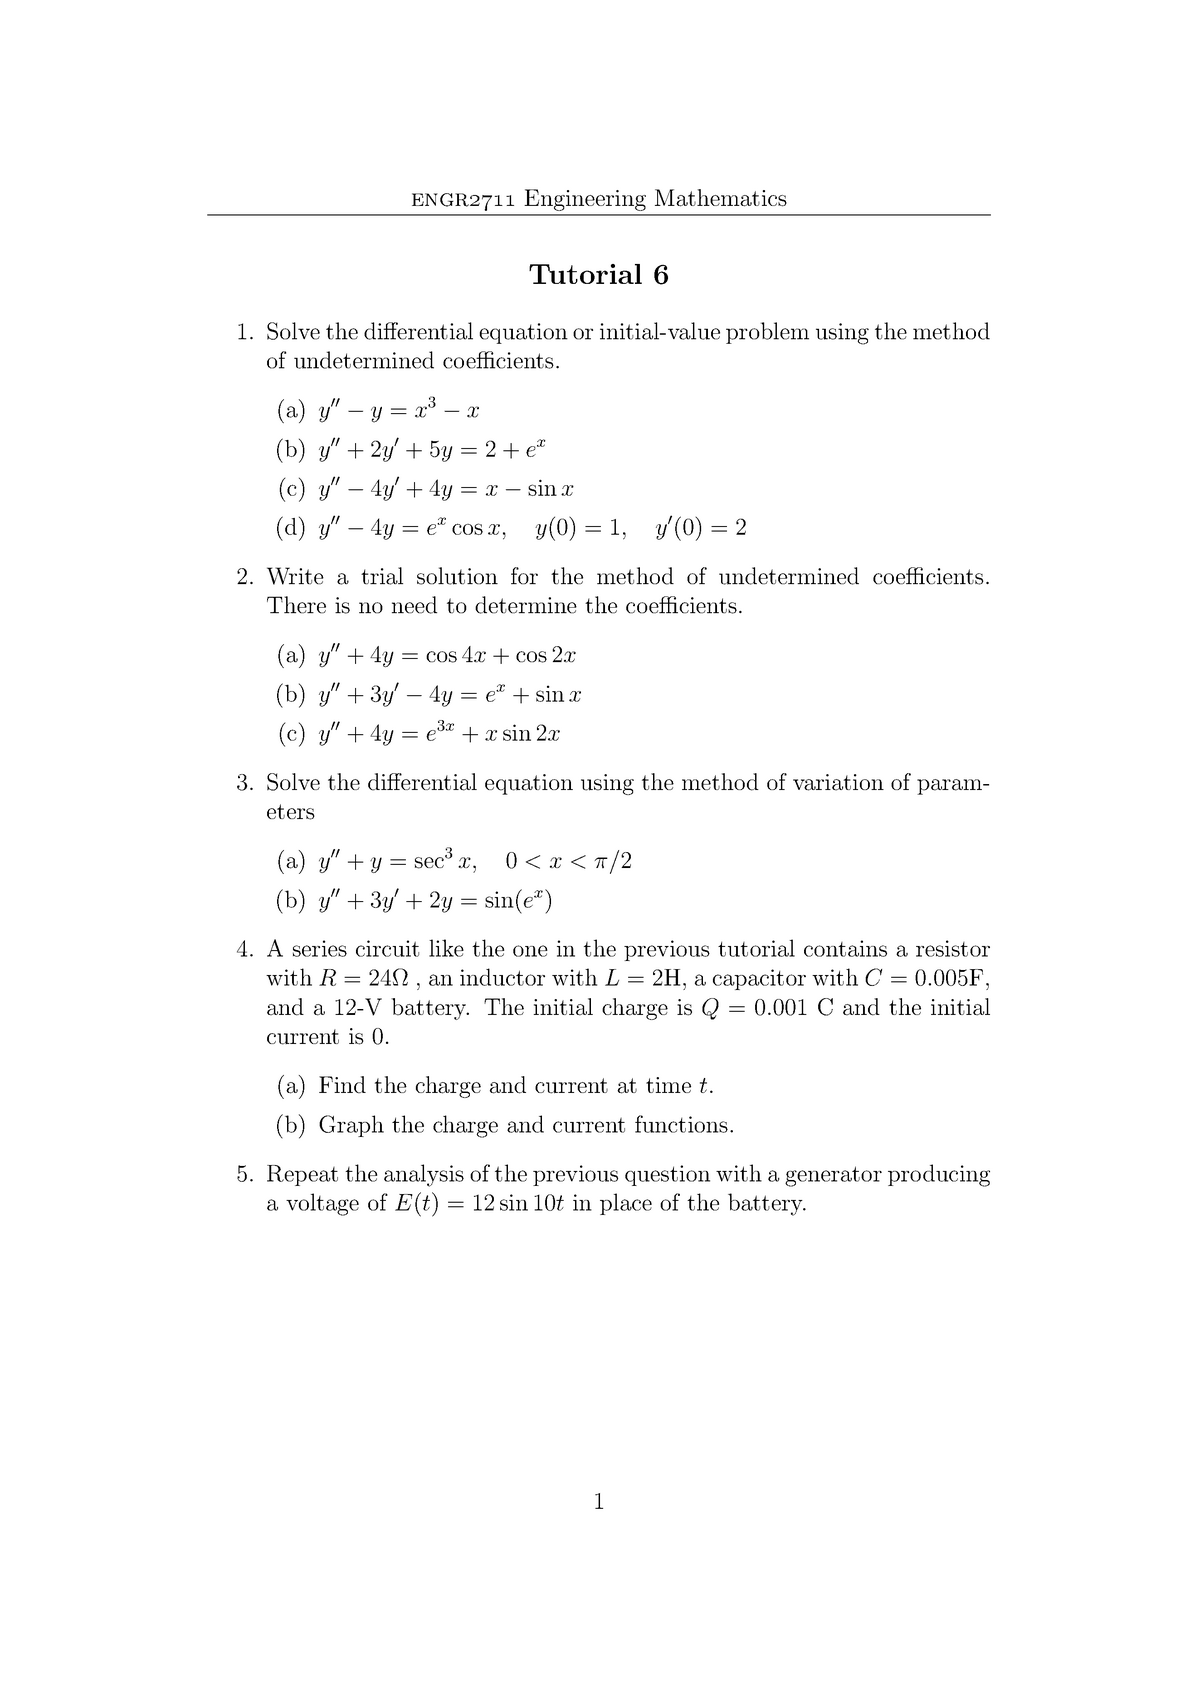 Tutorial 6 Engr2711 Engineering Mathematics Flinders Studocu